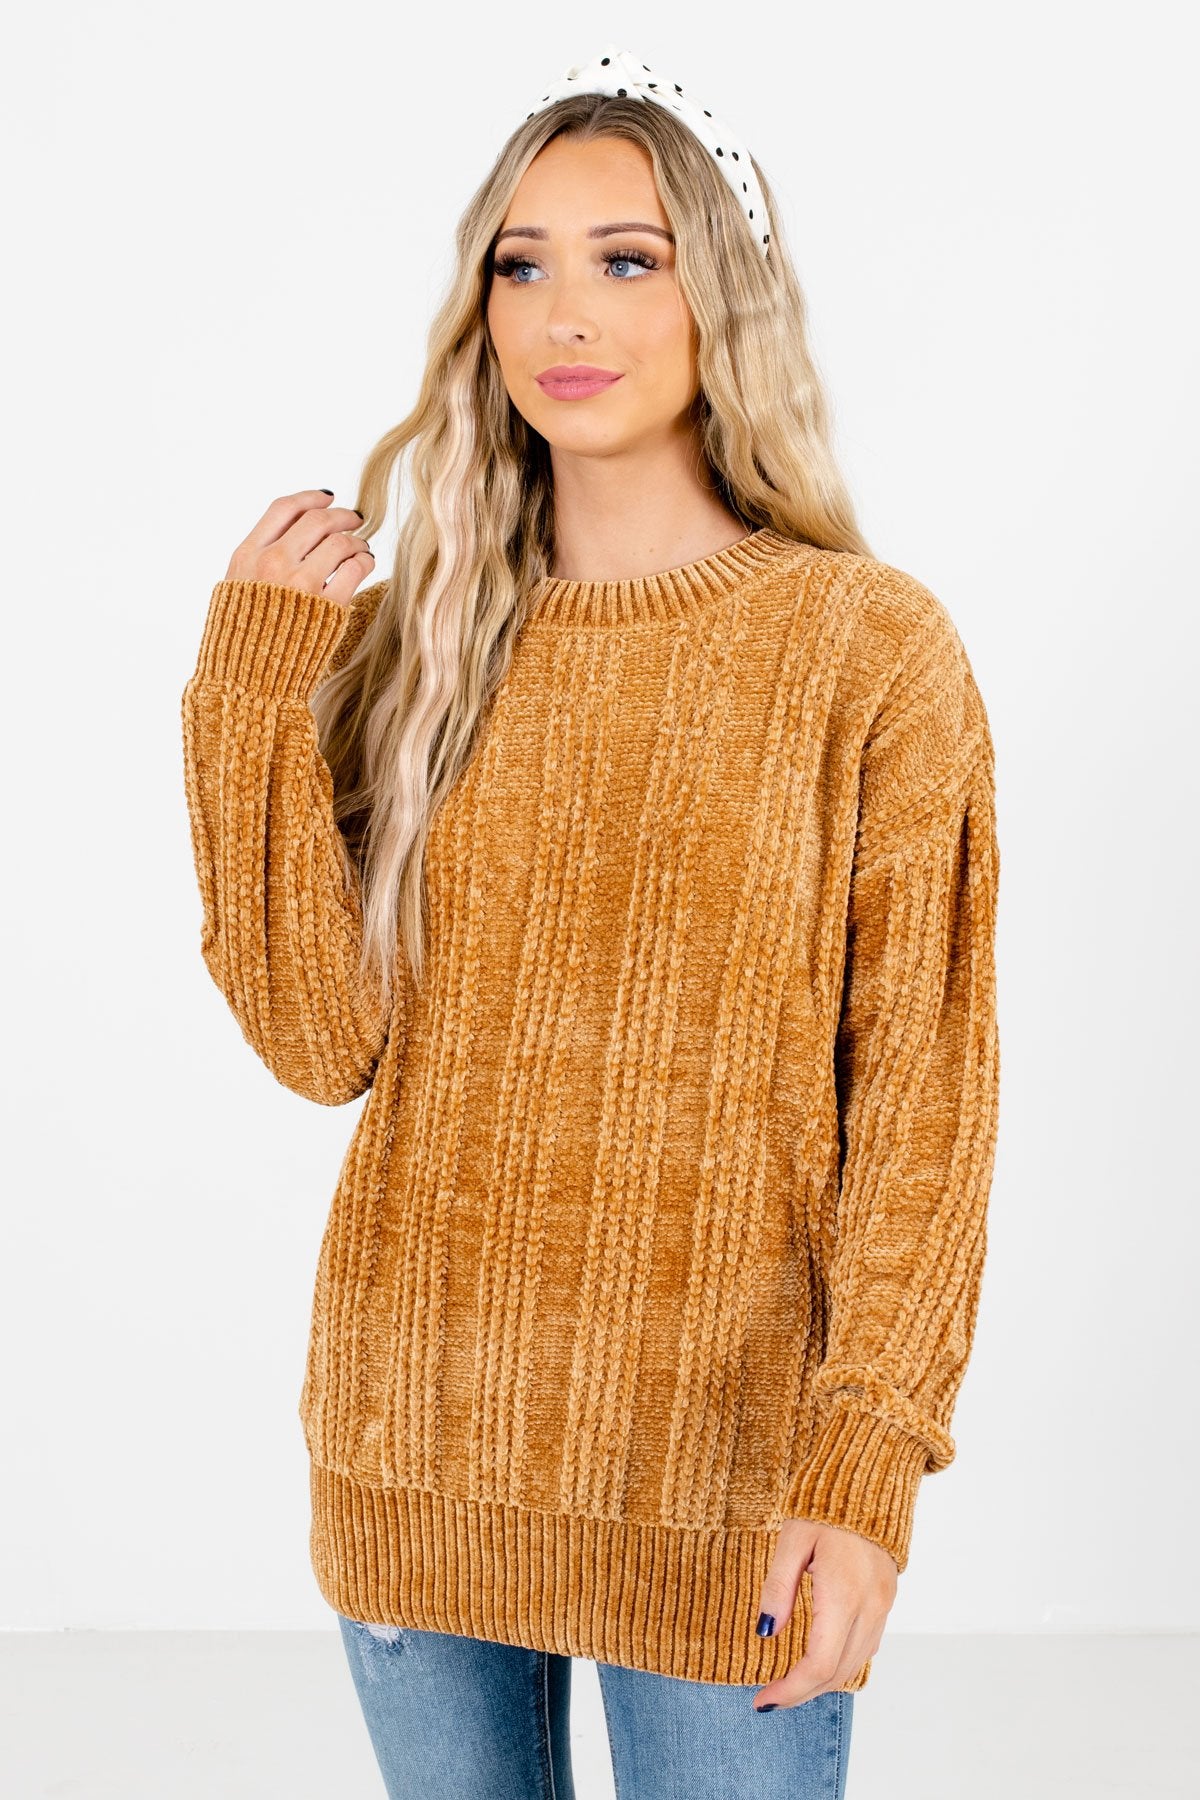 Women's Mustard Long Sleeve Boutique Sweater